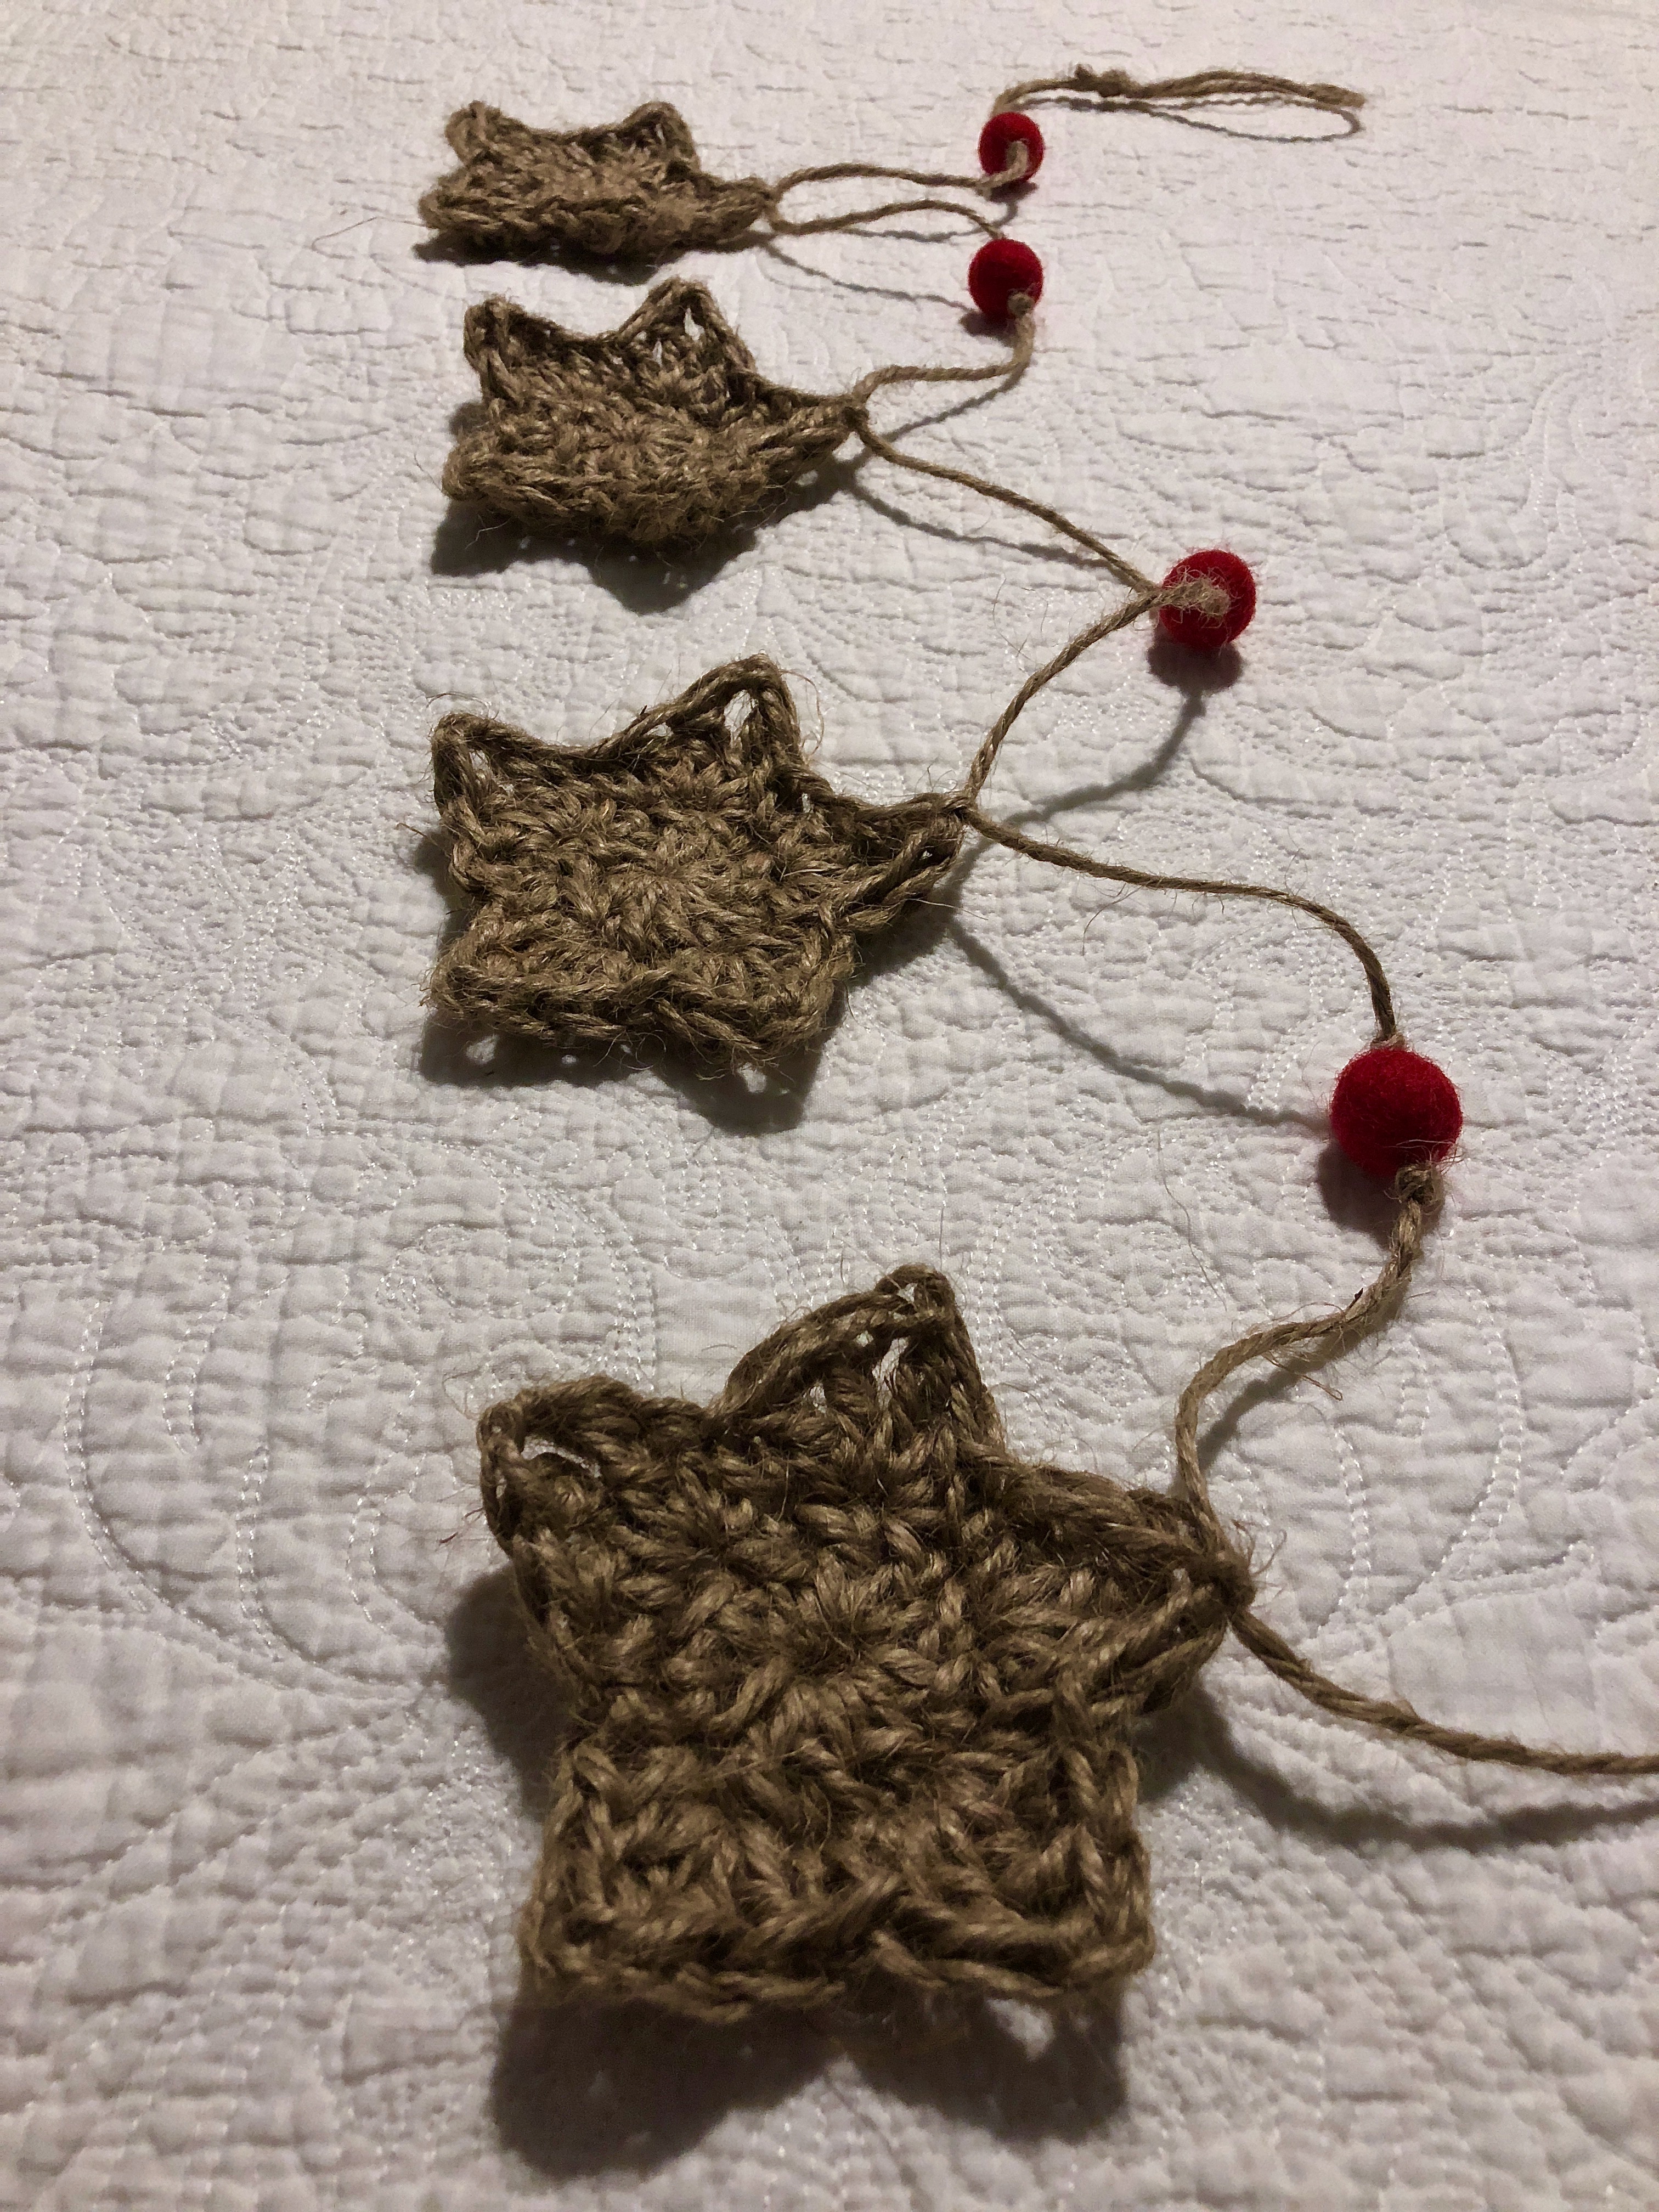 Jute twine, crocheted medium sized star and red felt pom-pom garland.